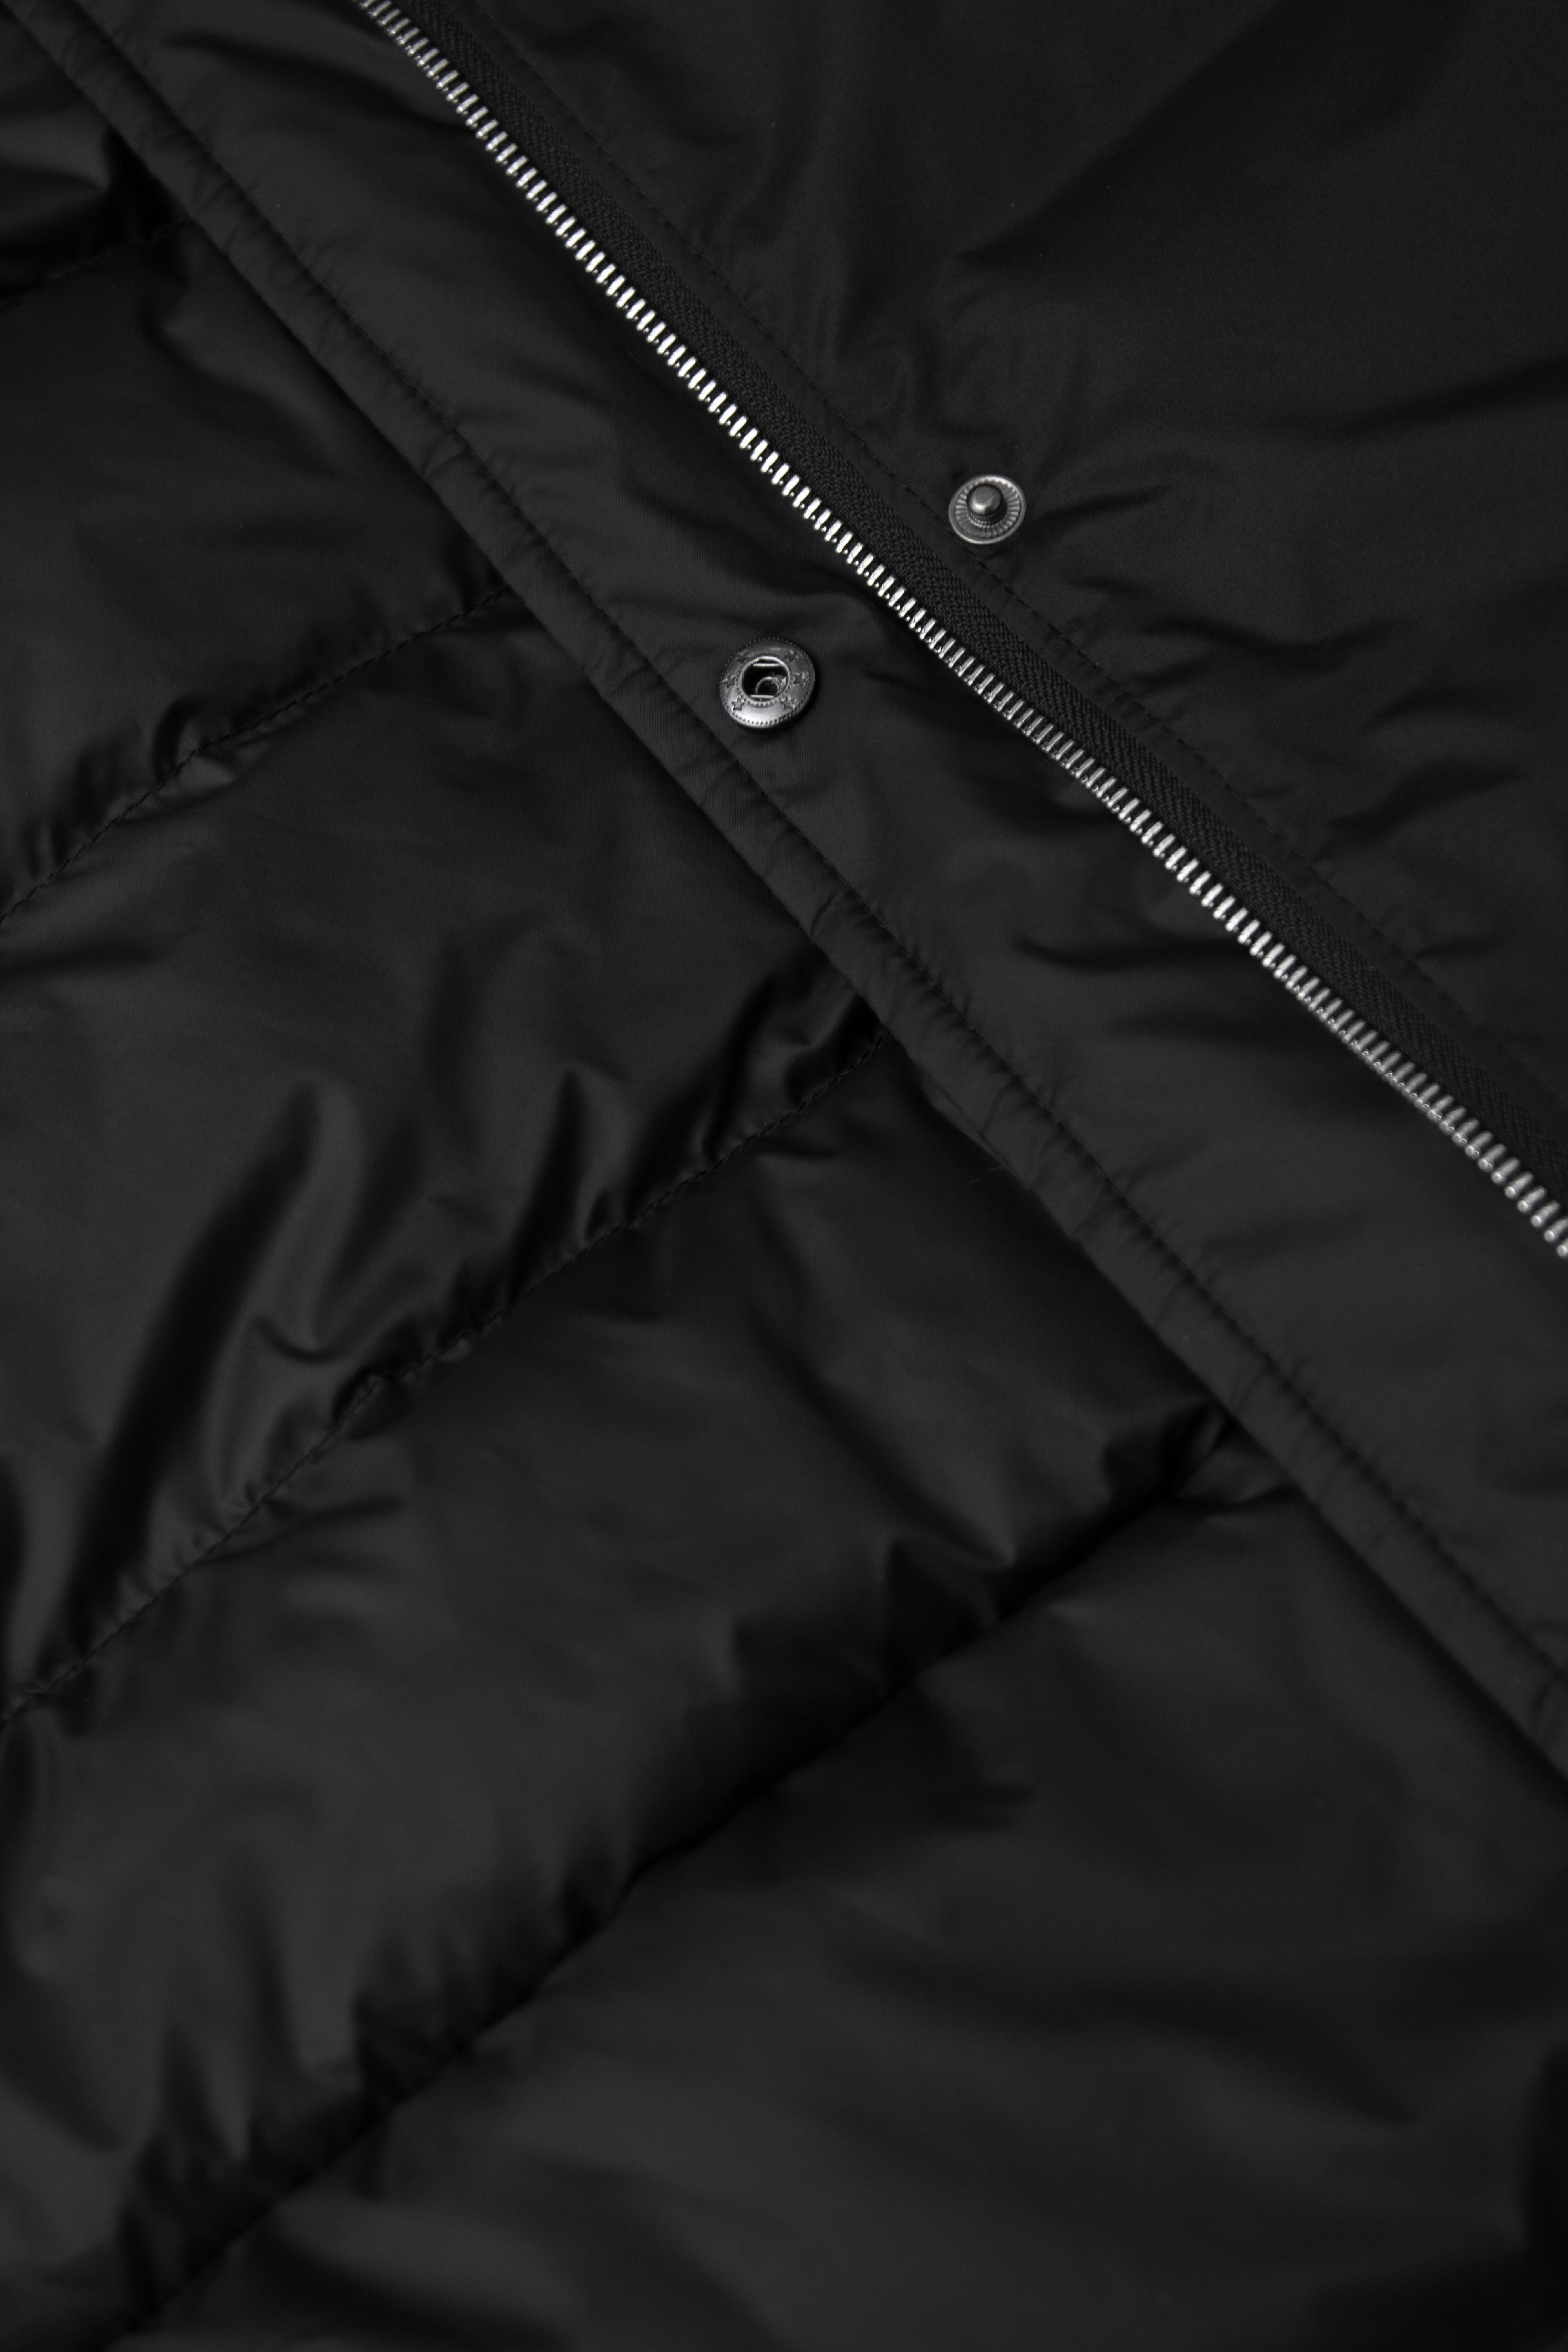 Down jacket 3809-01 Black from BRUSNiKA